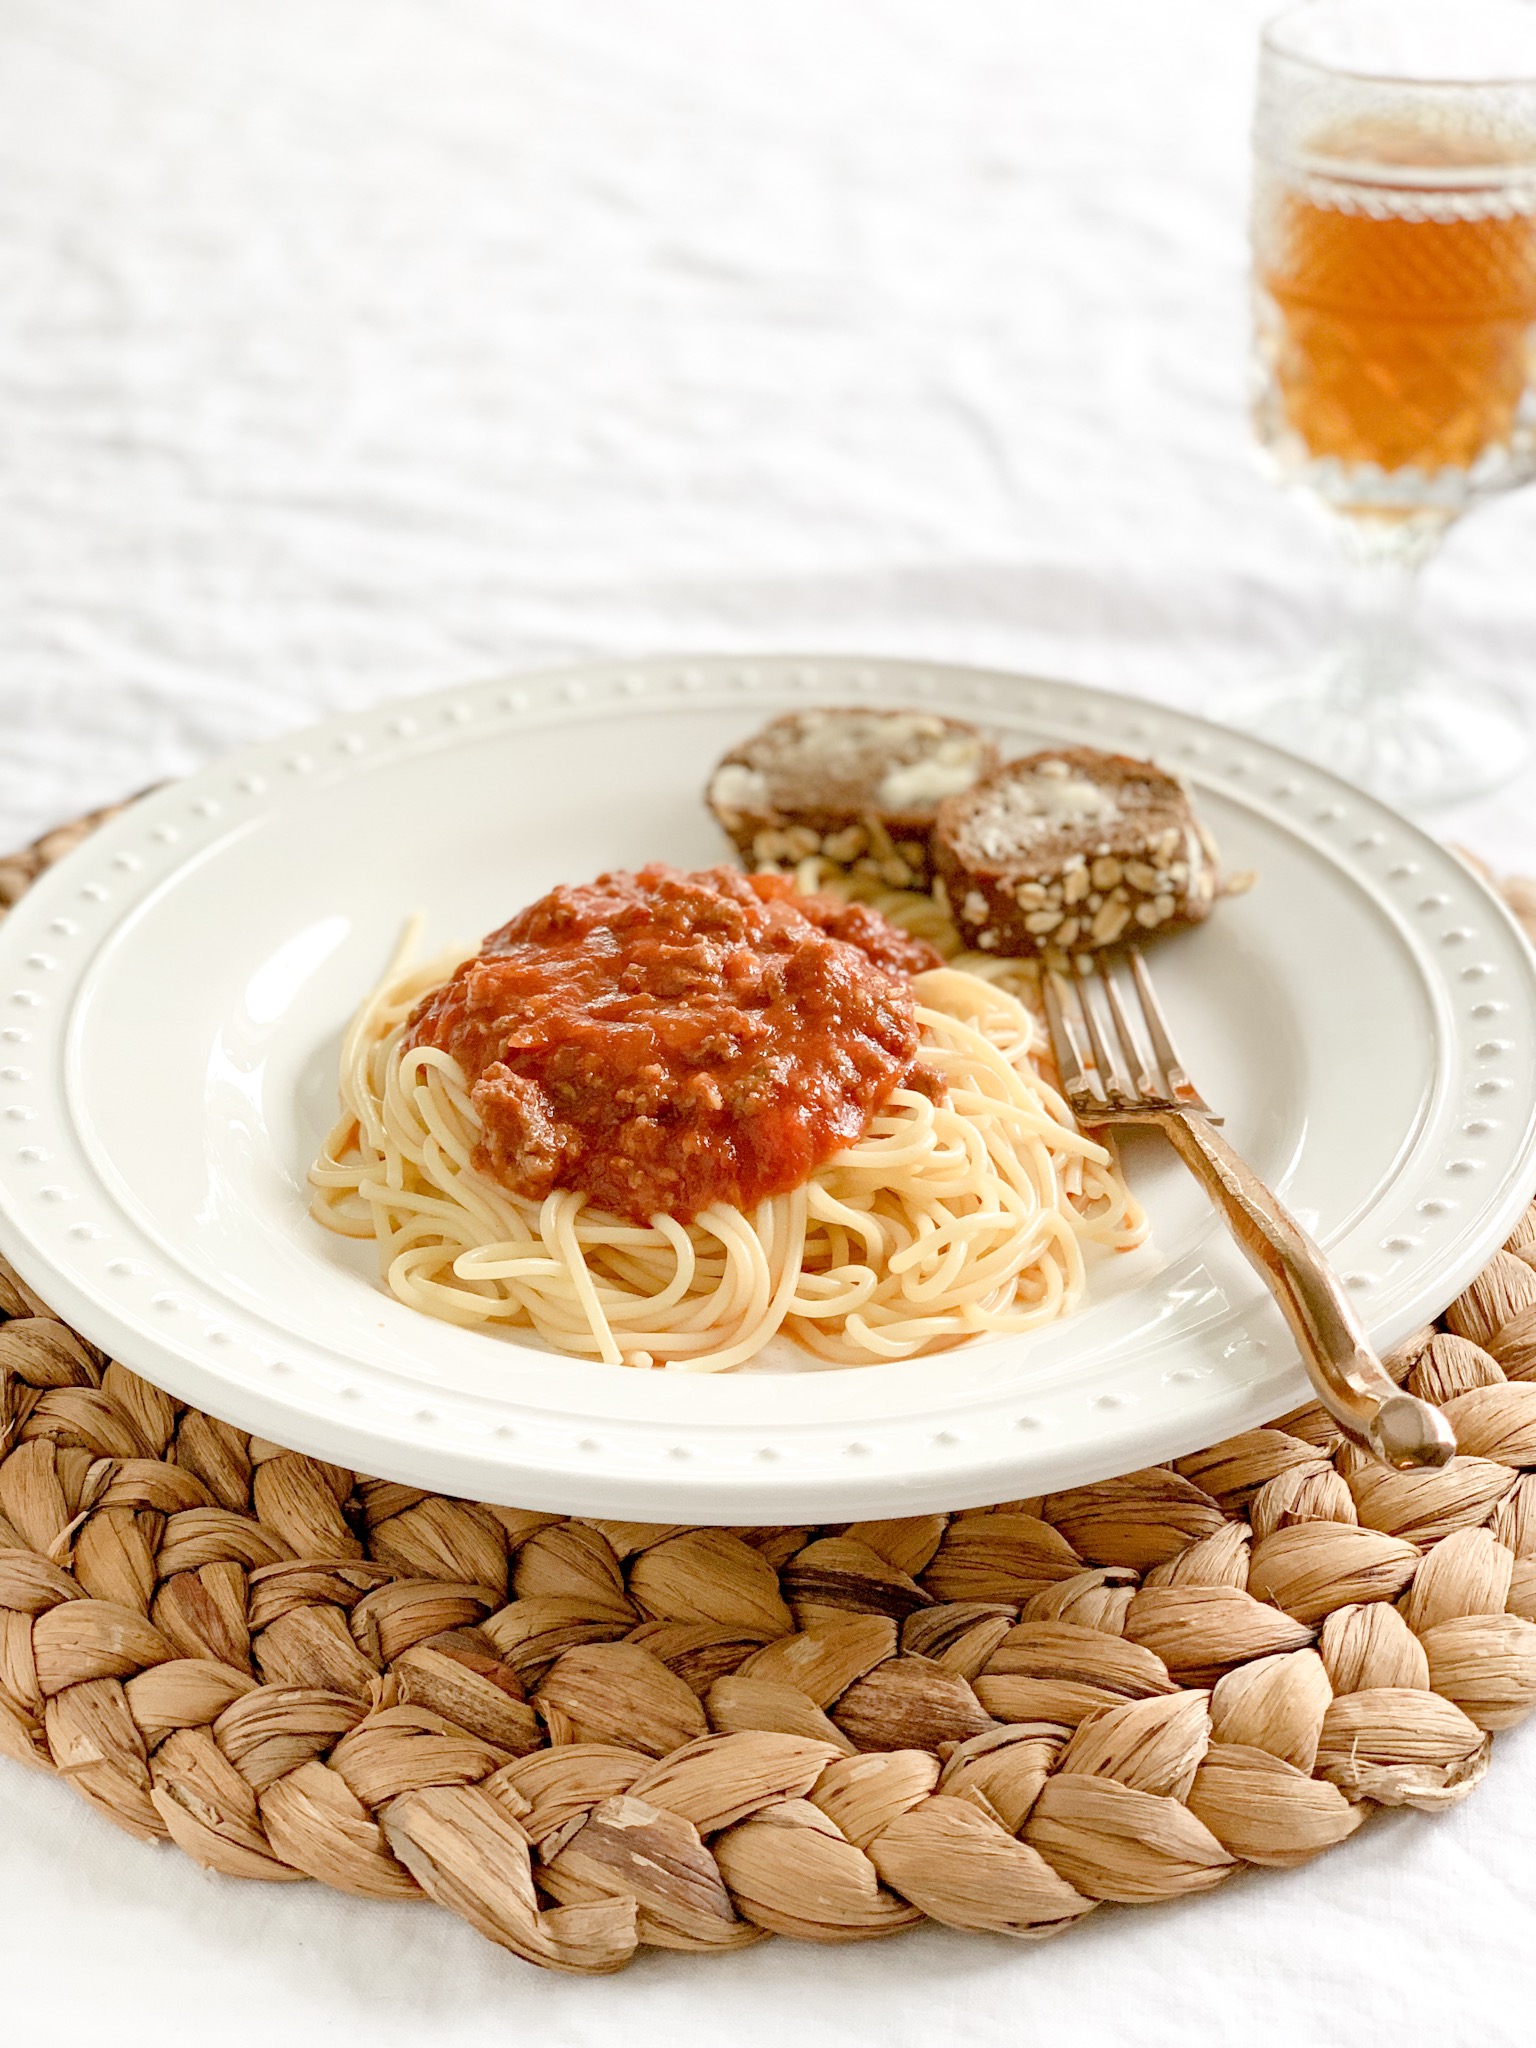 Homemade Spaghetti Sauce With Meat / Spaghetti Sauce With Meat / Spaghetti Sauce Recipe / Best Spaghetti Sauce Recipe / HallstromHome